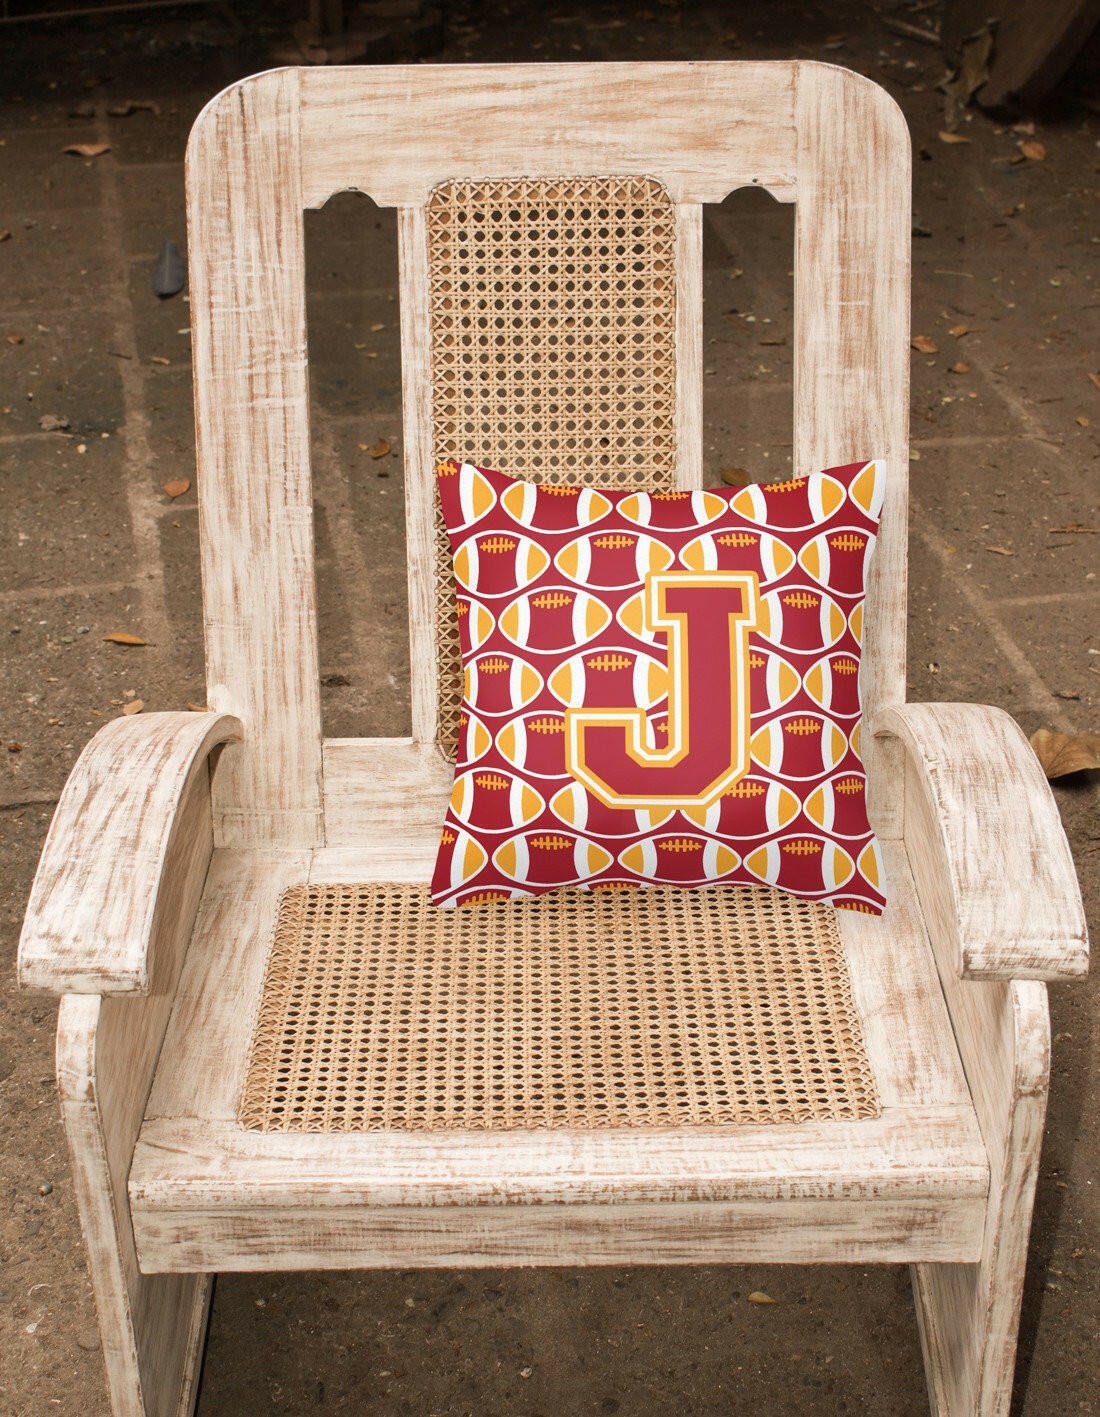 Letter J Football Cardinal and Gold Fabric Decorative Pillow CJ1070-JPW1414 by Caroline's Treasures